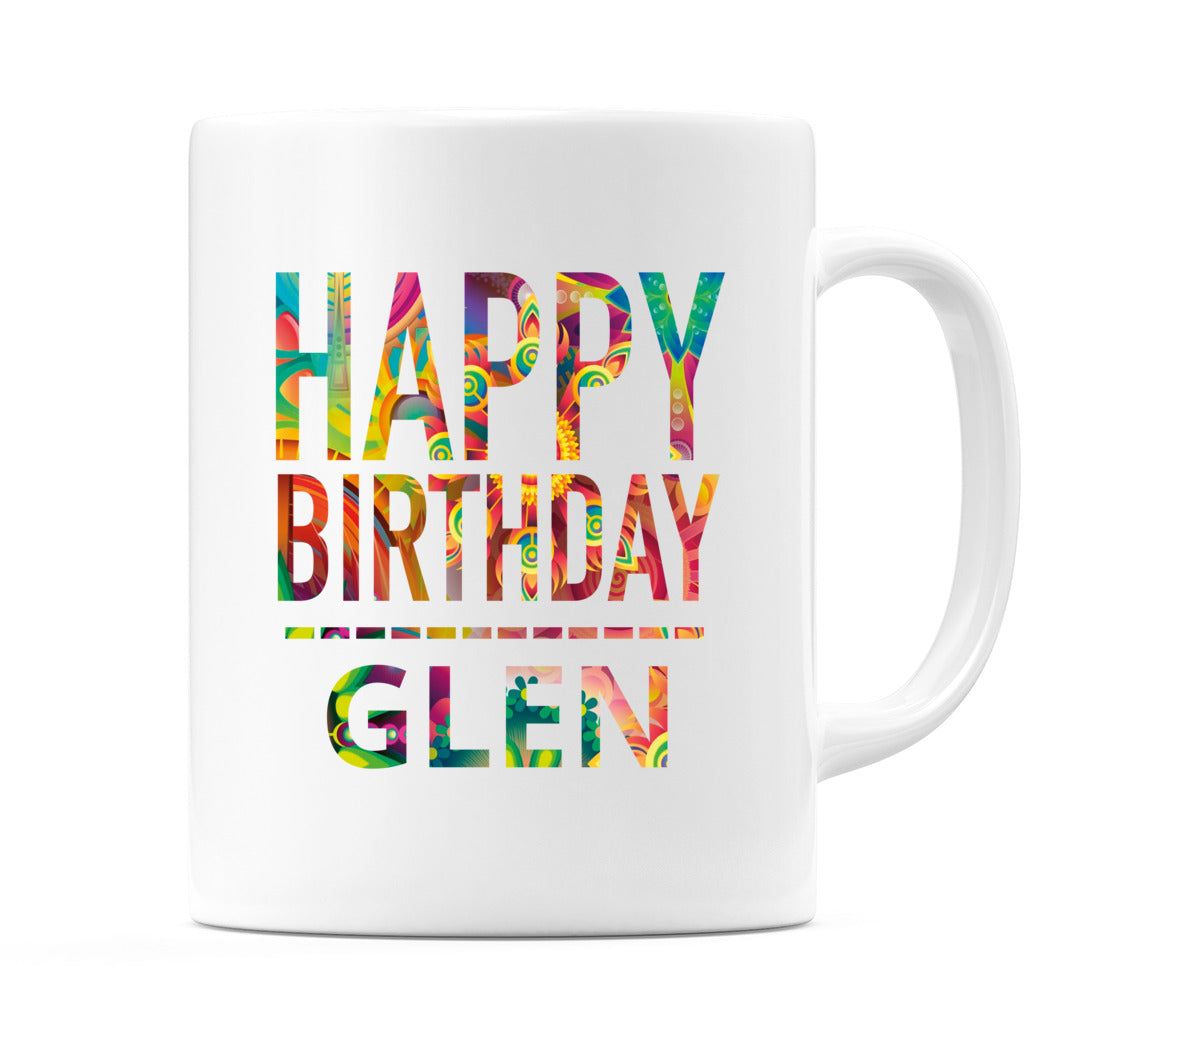 Happy Birthday Glen (Tie Dye Effect) Mug Cup by WeDoMugs